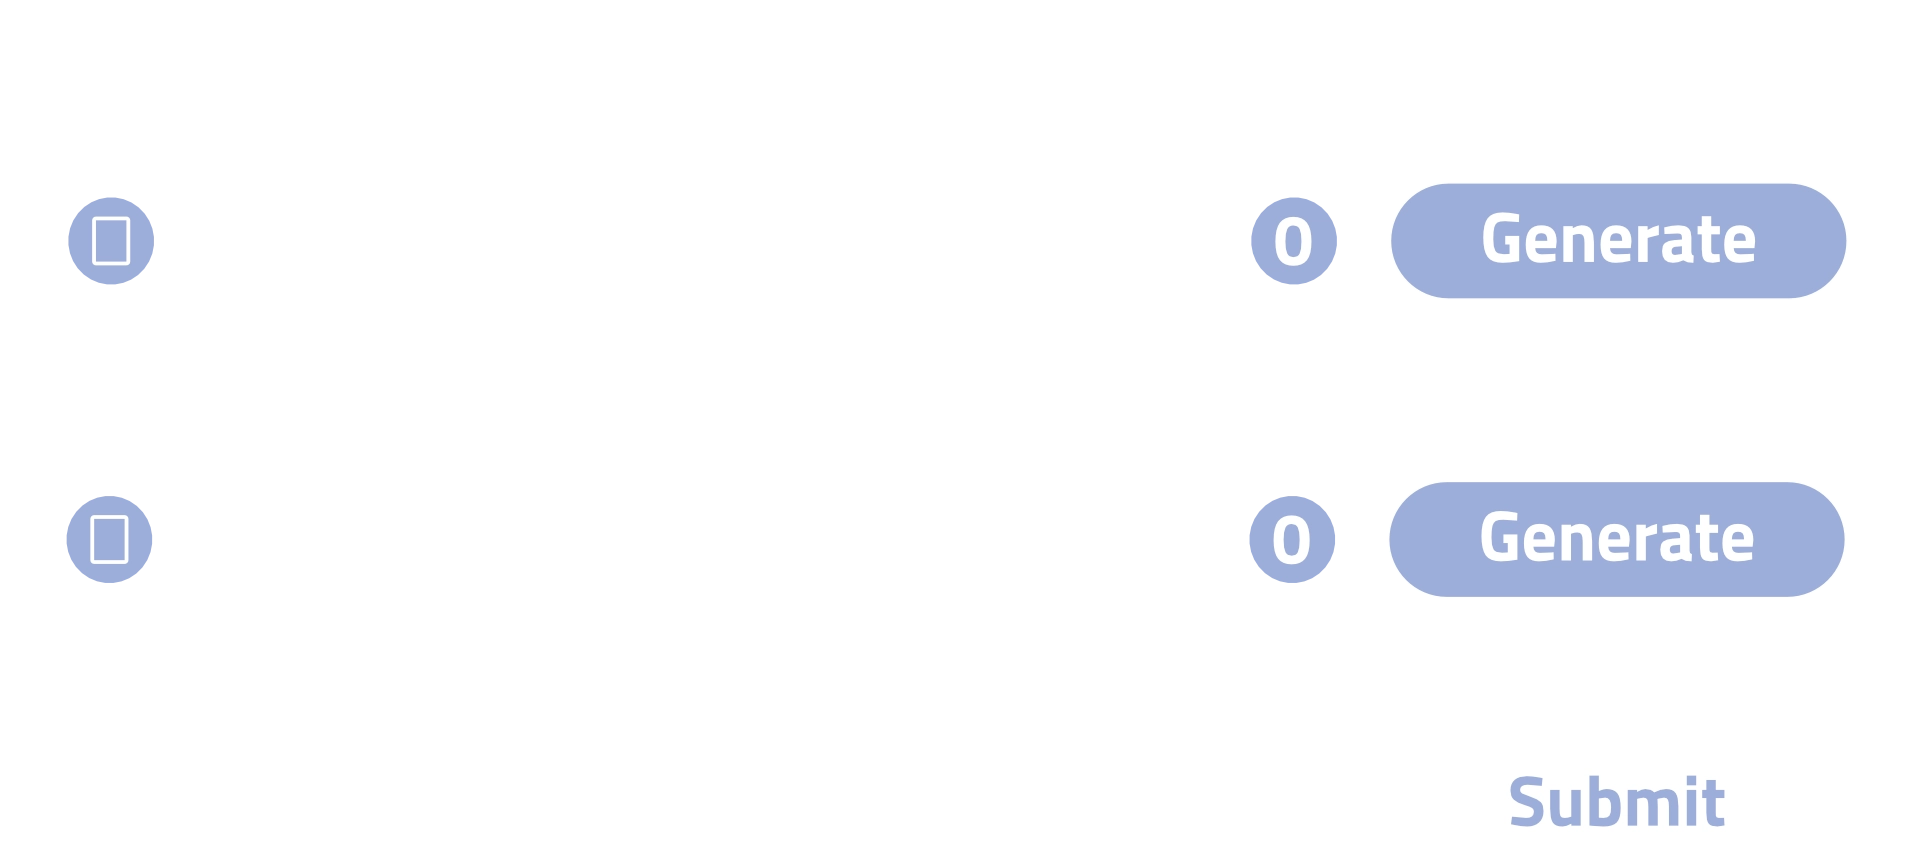 updatedmodel documentation